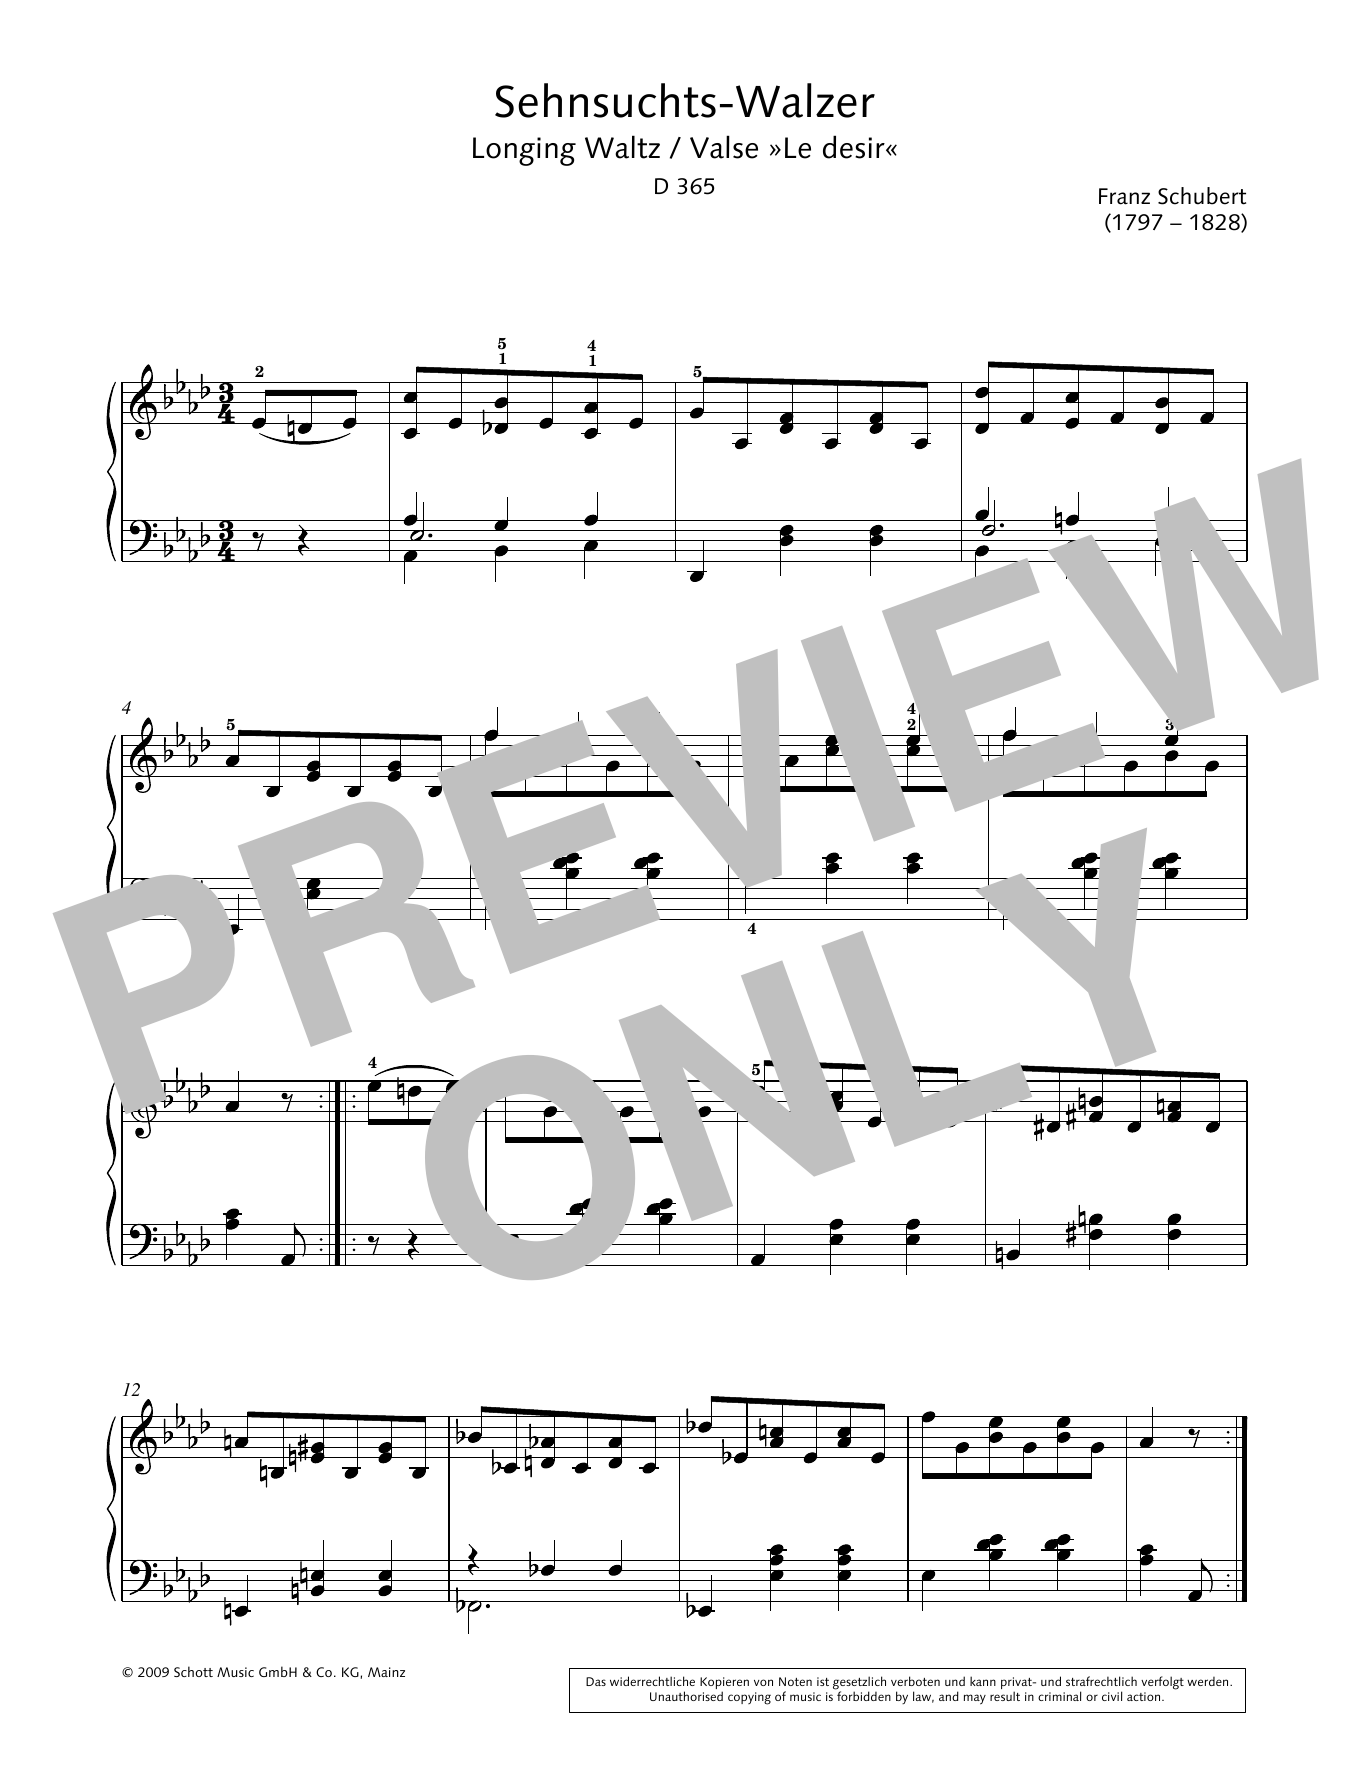 Hans-Gunter Heumann Longing Waltz Sheet Music Notes & Chords for Piano Solo - Download or Print PDF